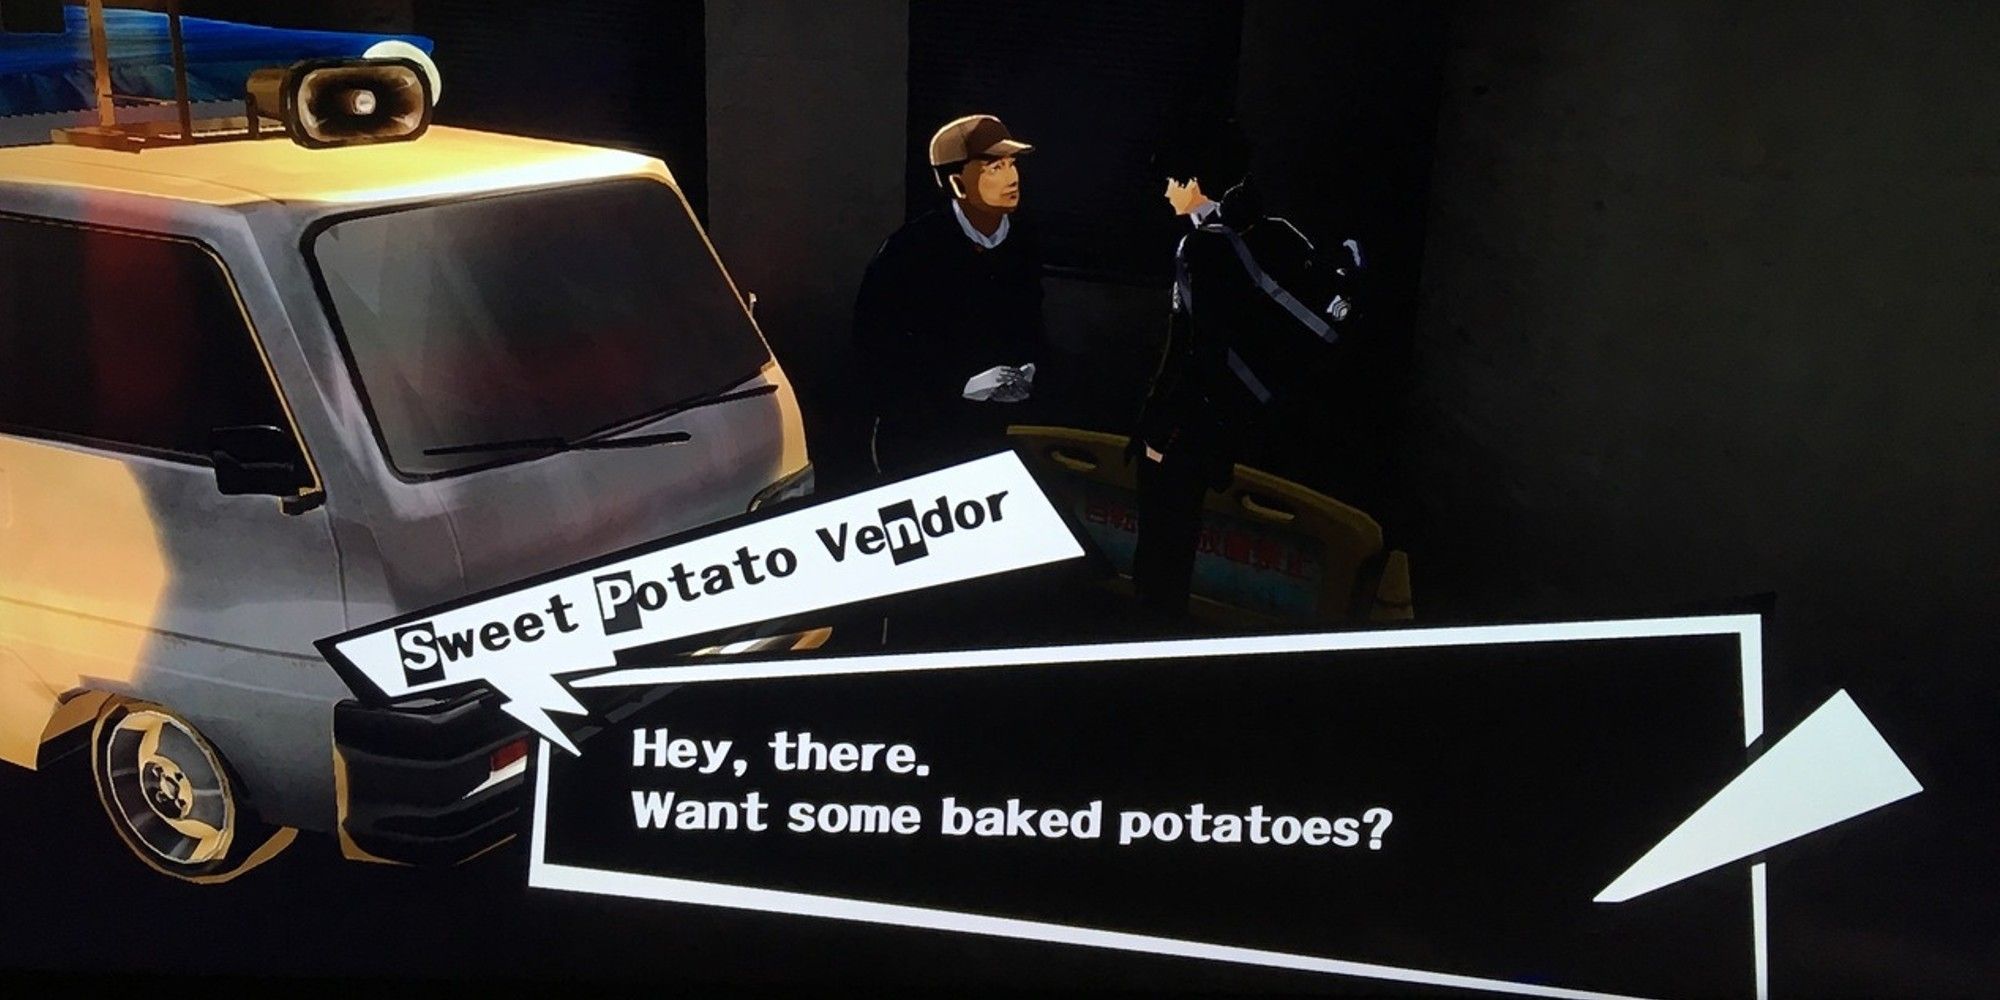 joker speaking with sweet potato vendor